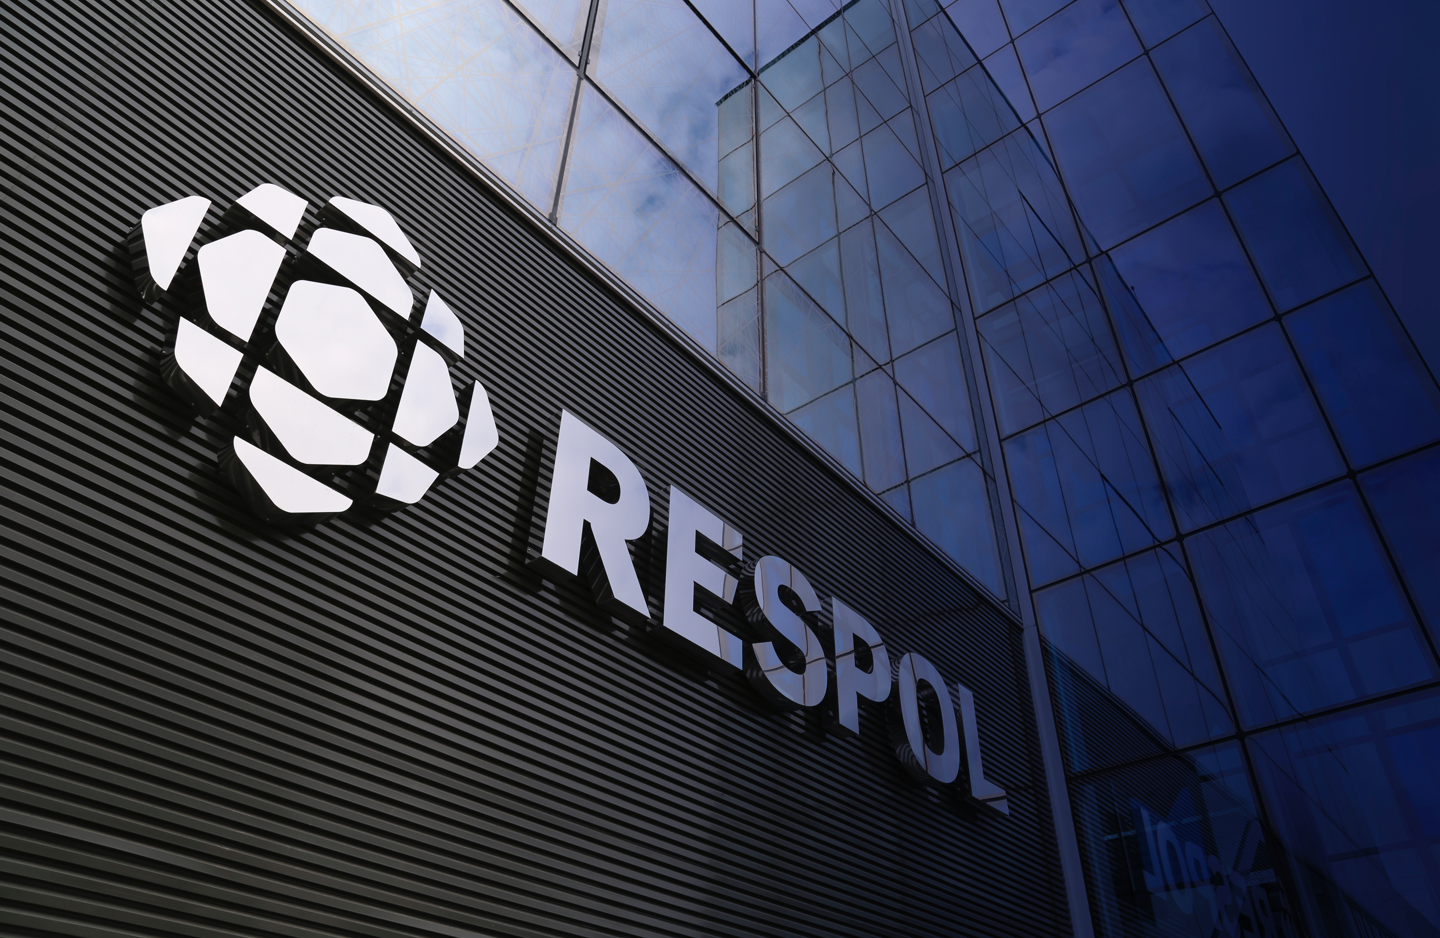 Respol Resinas receives ISCC Plus Certification